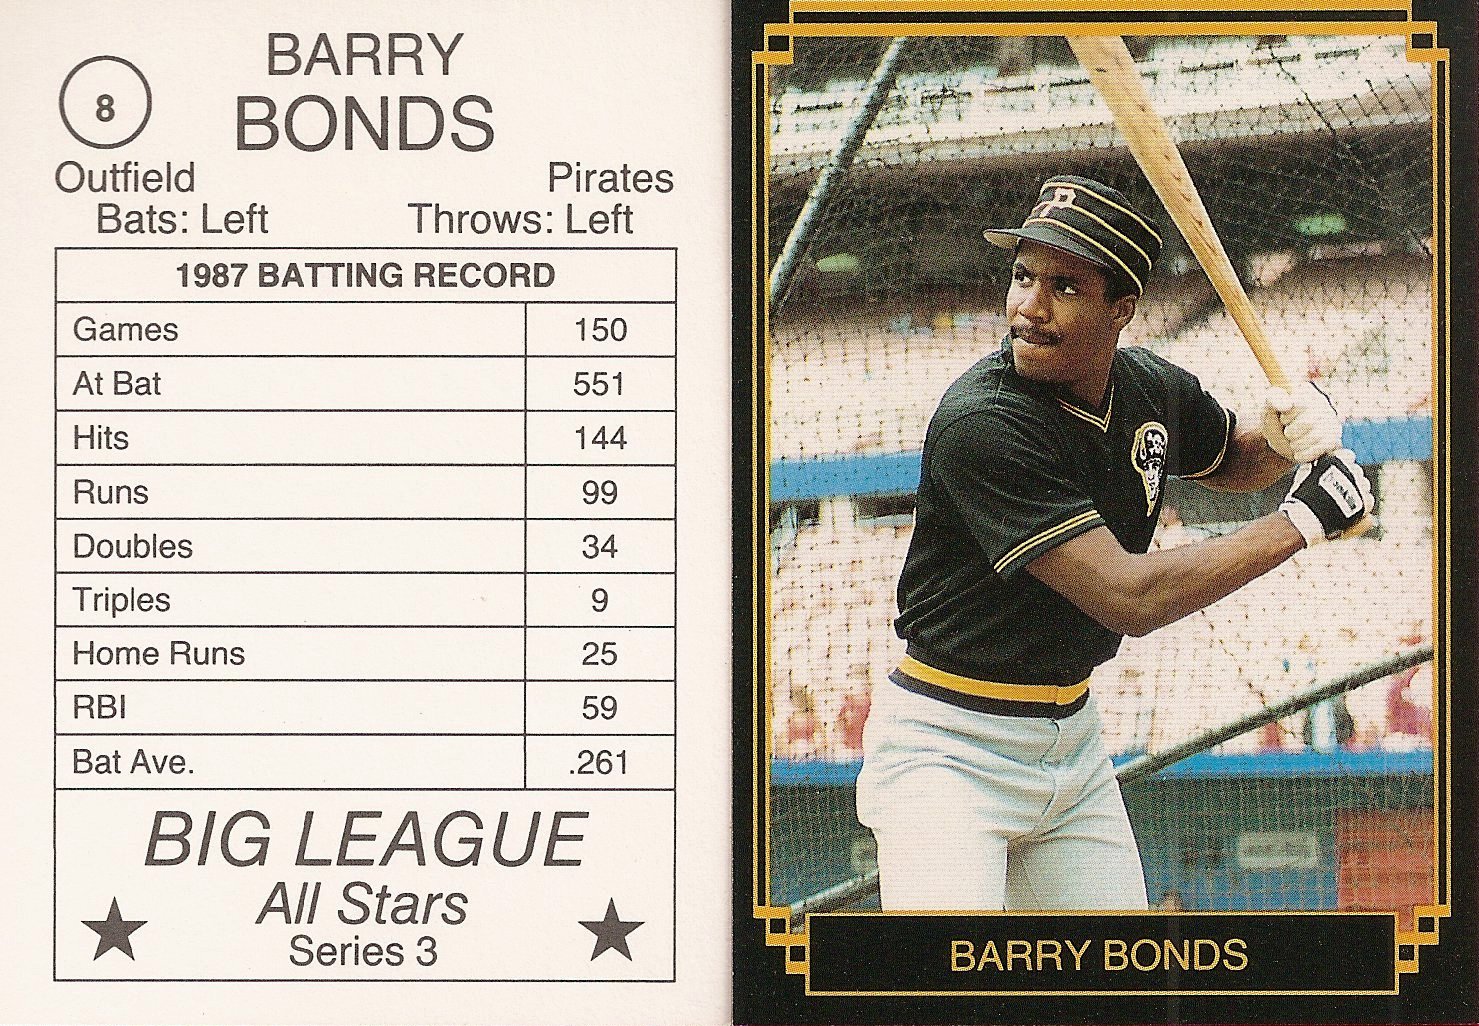 1988 Big League All-Stars Series 3